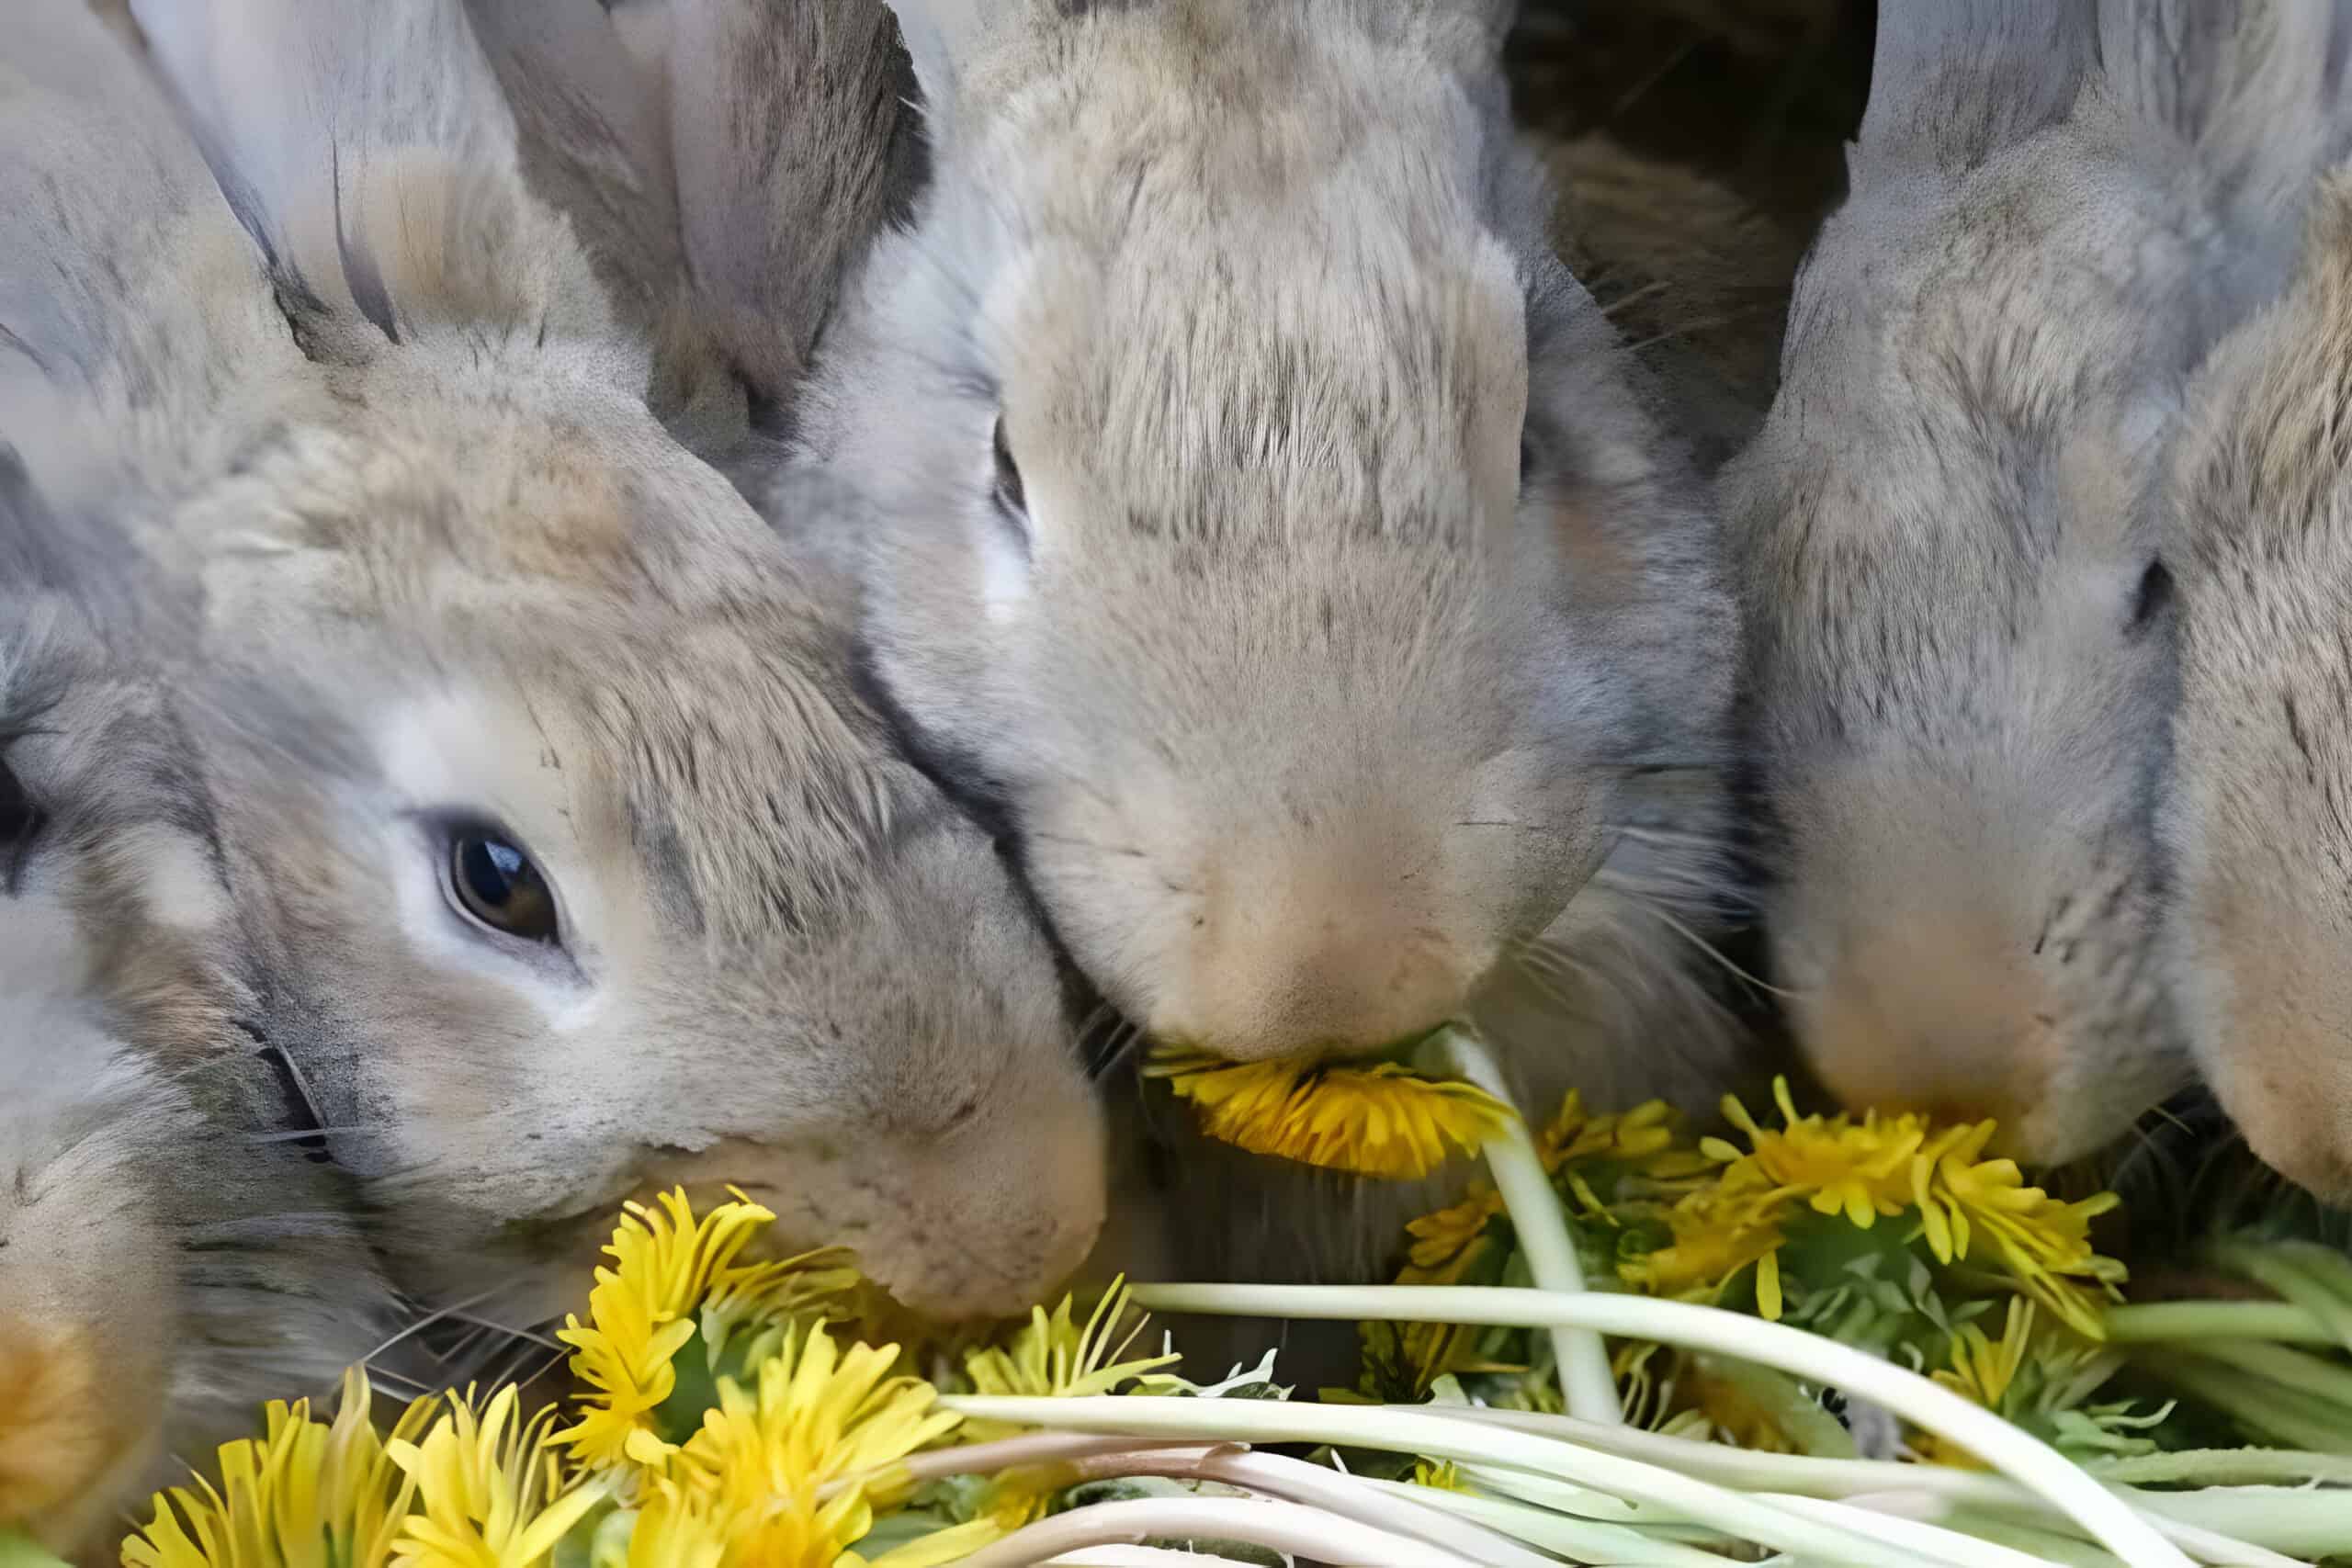 bunnies eating dandelions